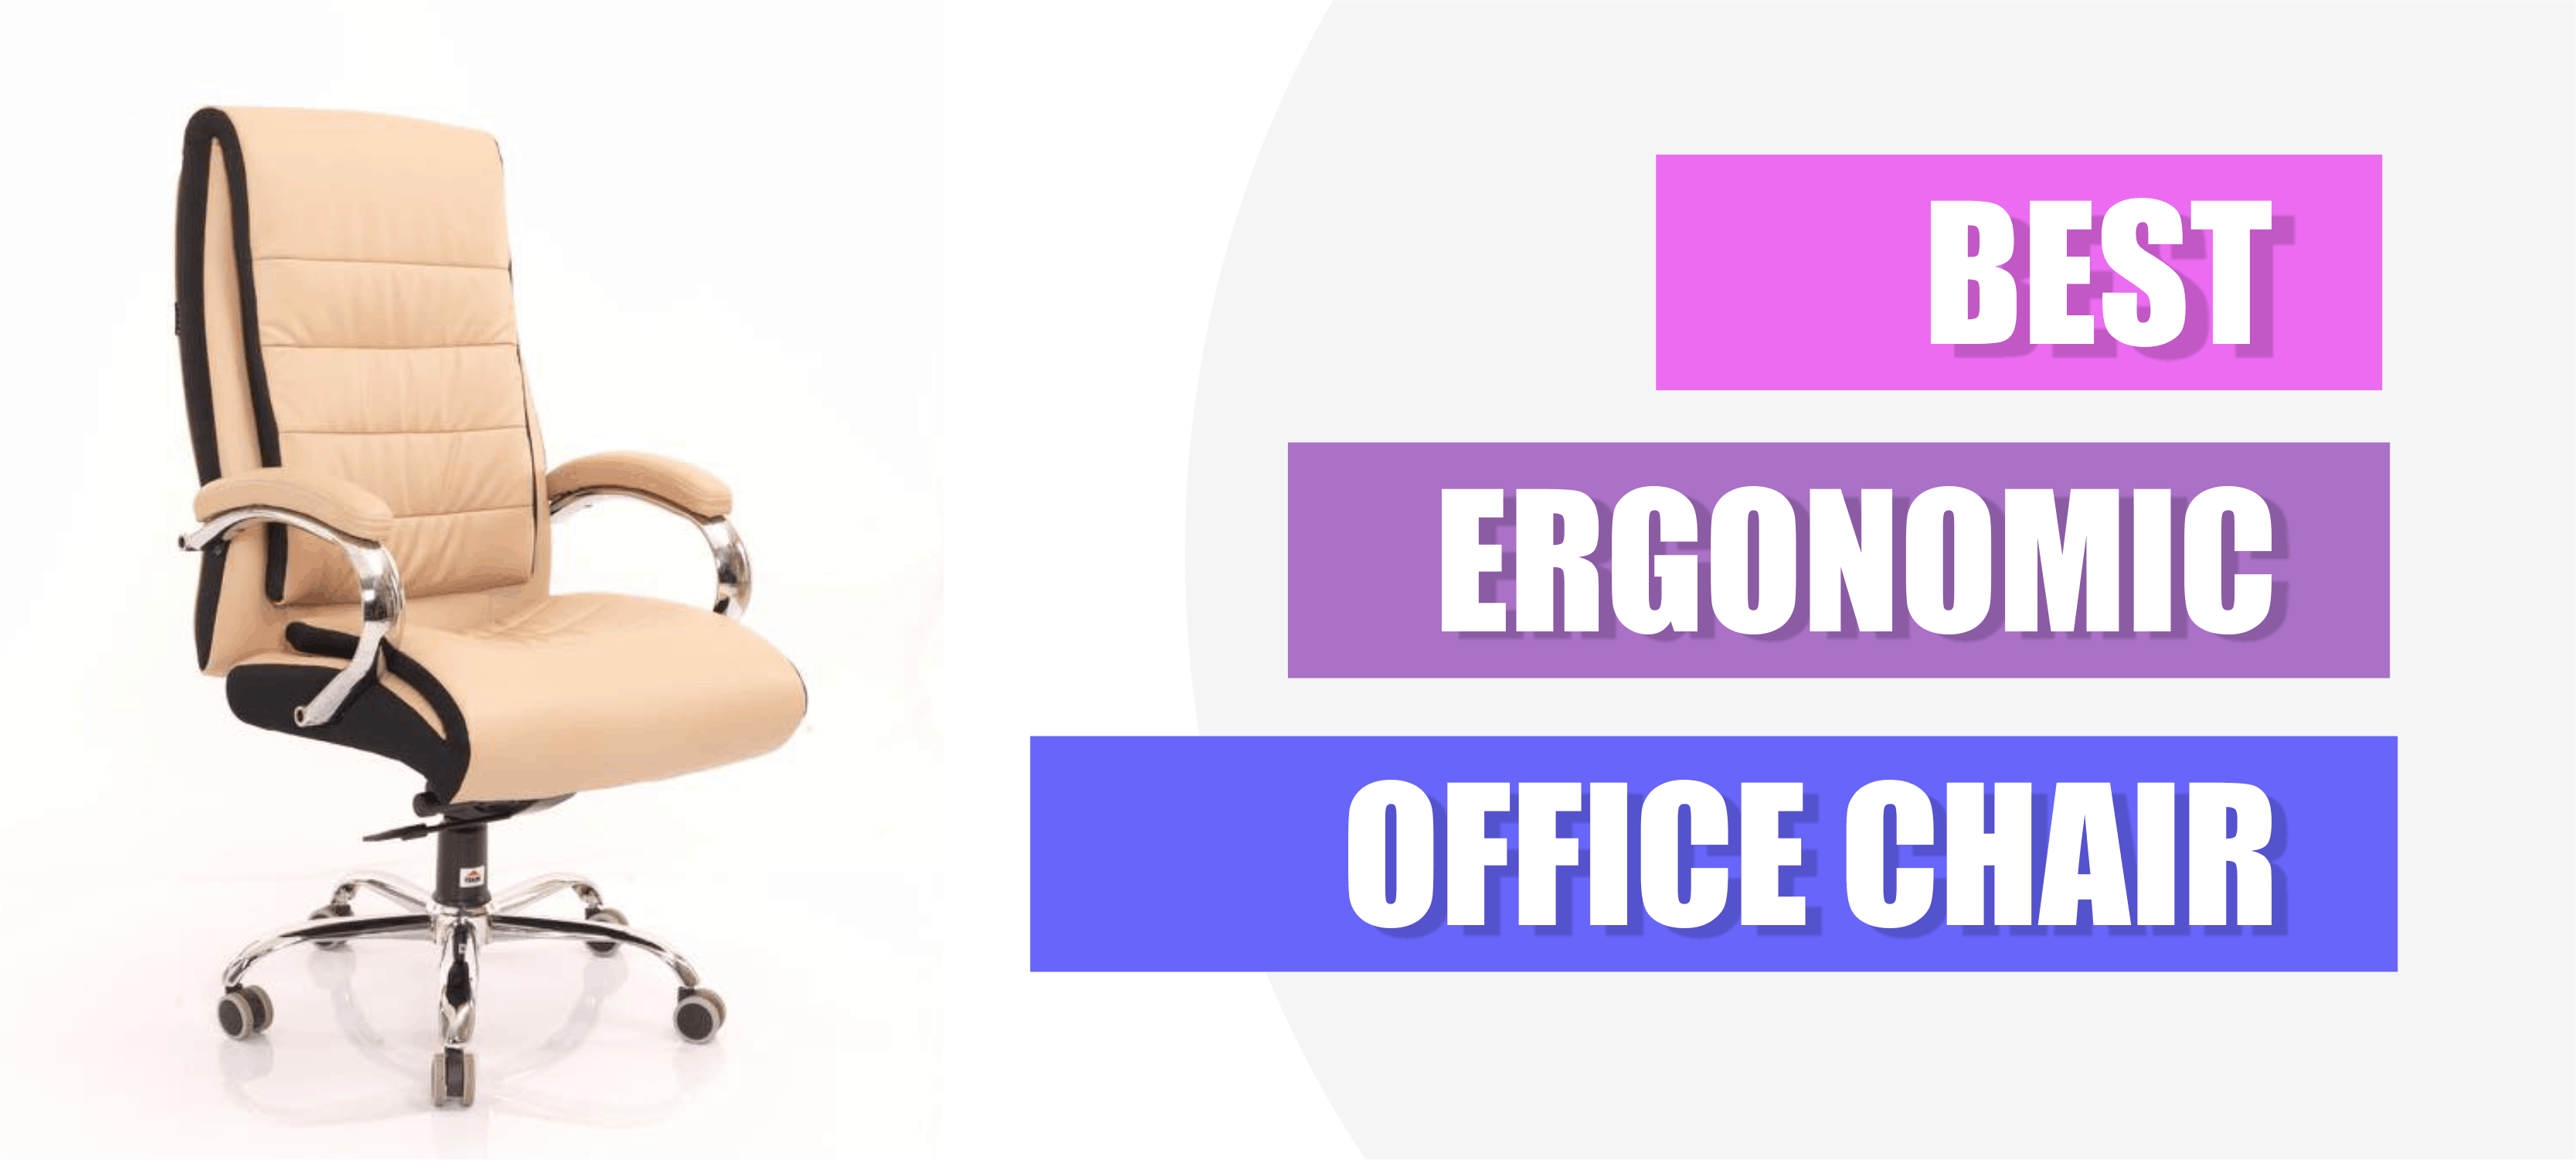 Ergonomic Office Chair Manufacturer